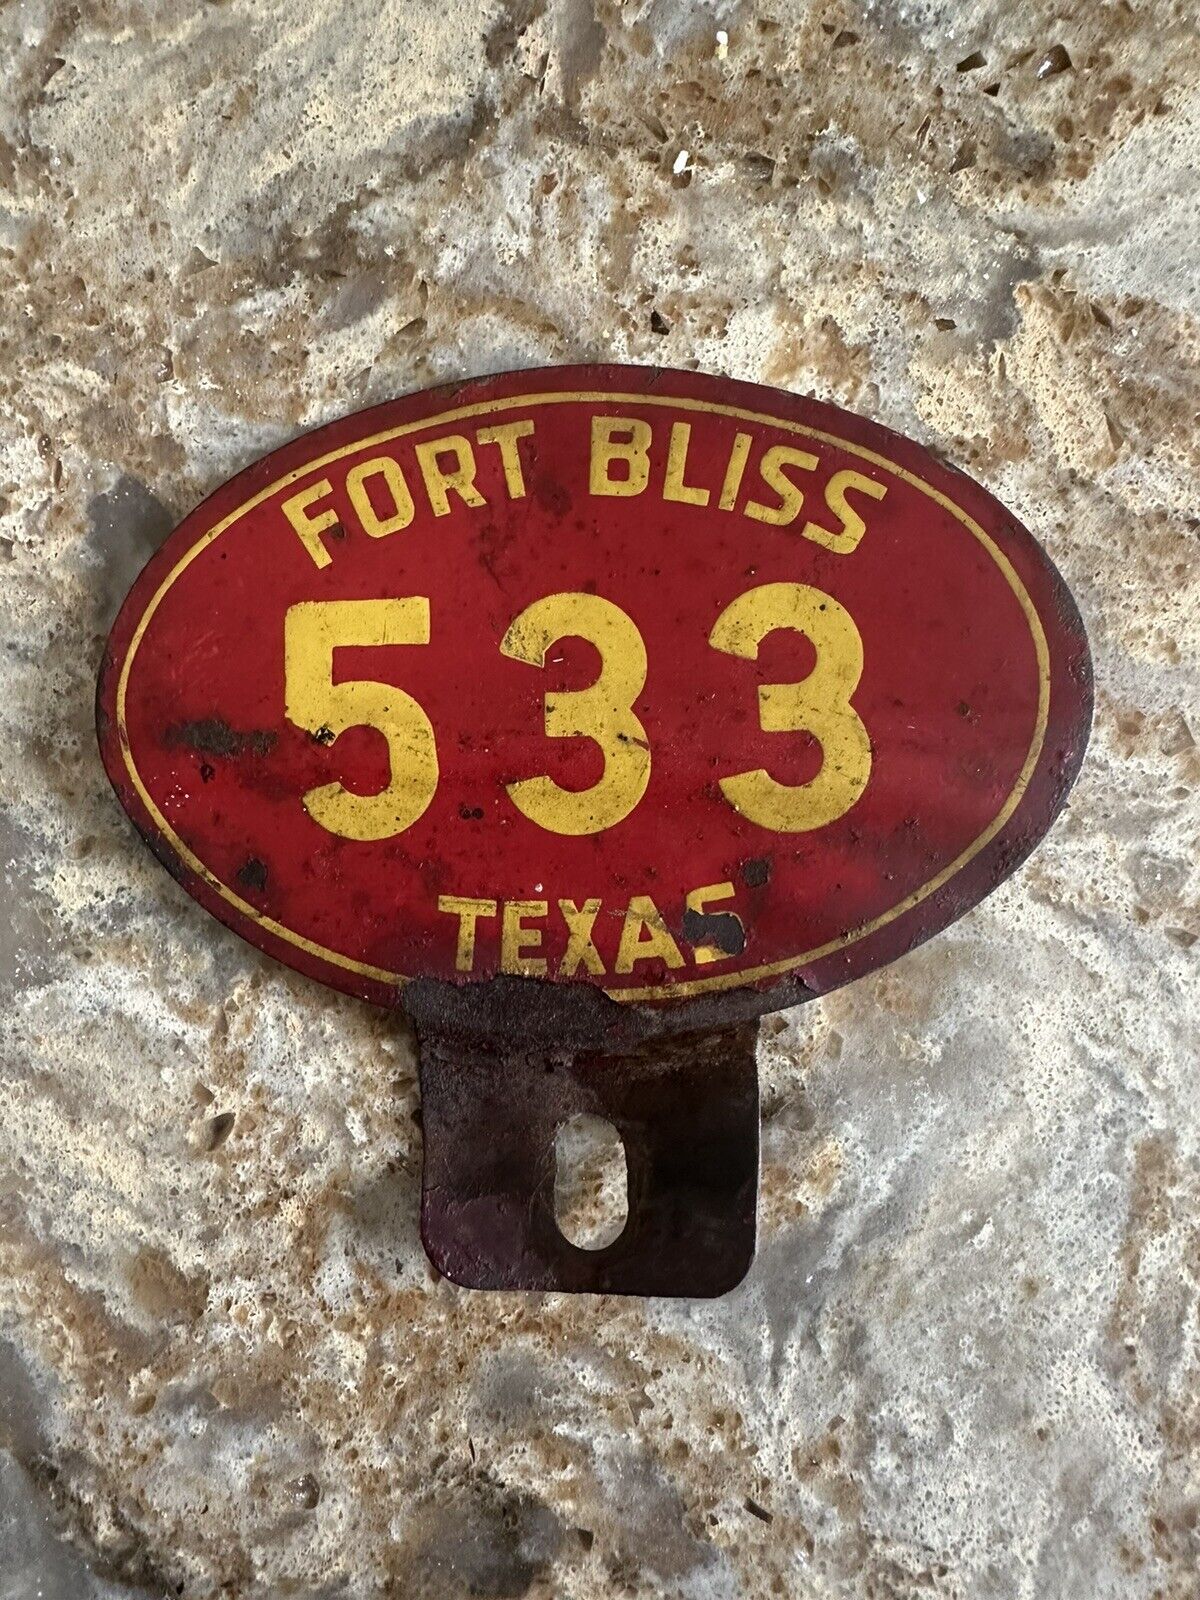 Vintage Metal Fort Bliss Texas License Plate “533”